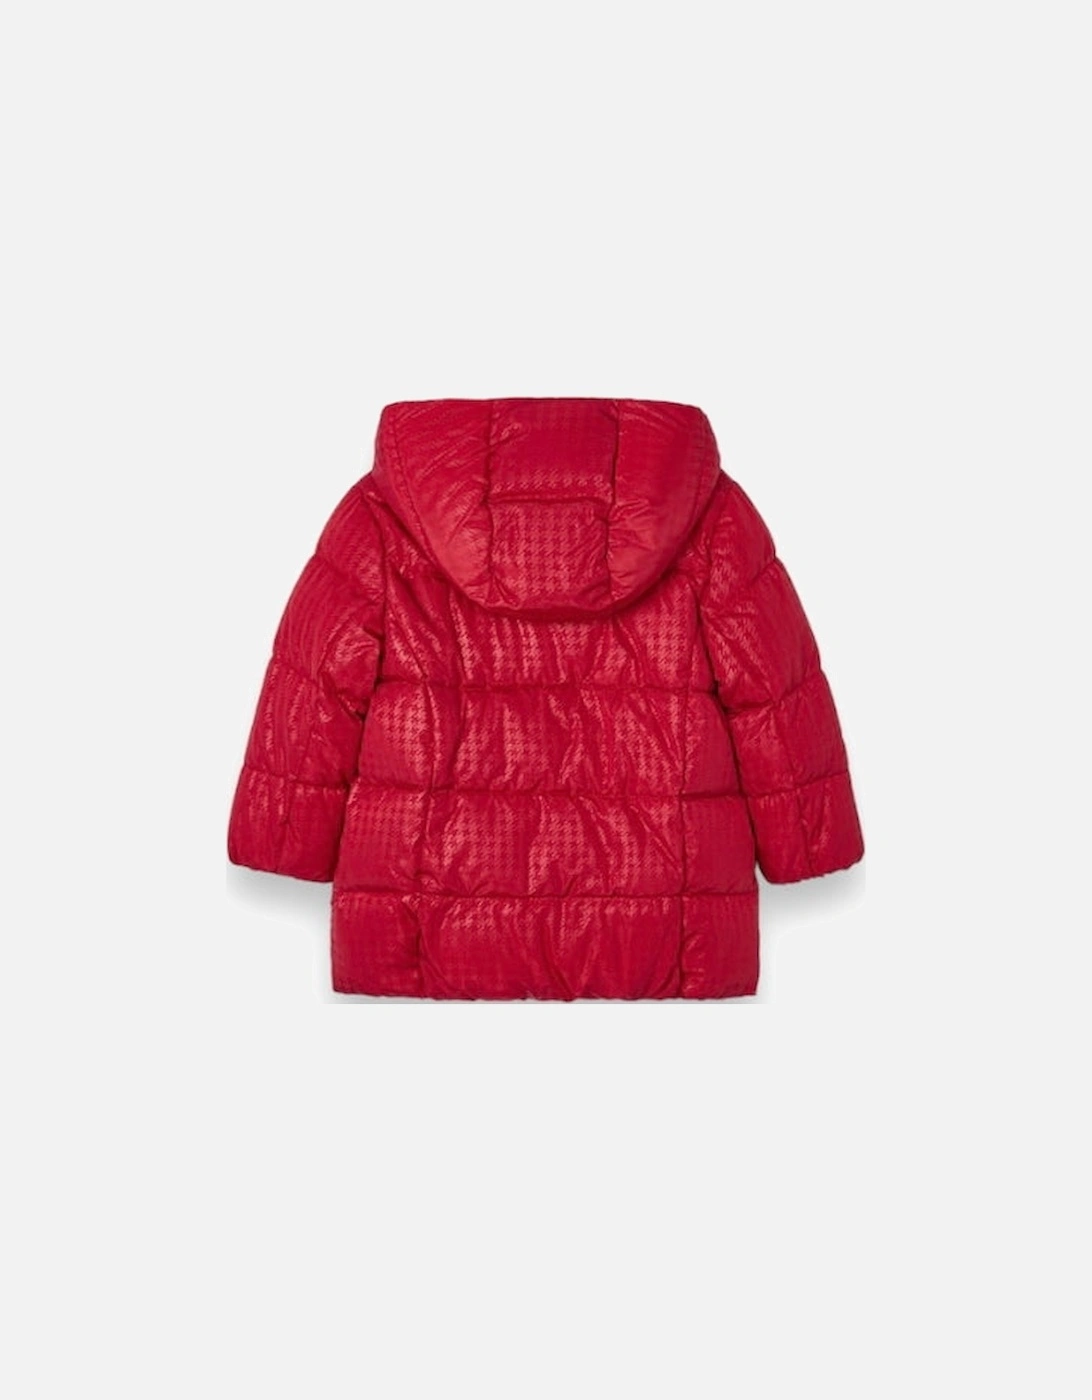 Red Puffer Coat